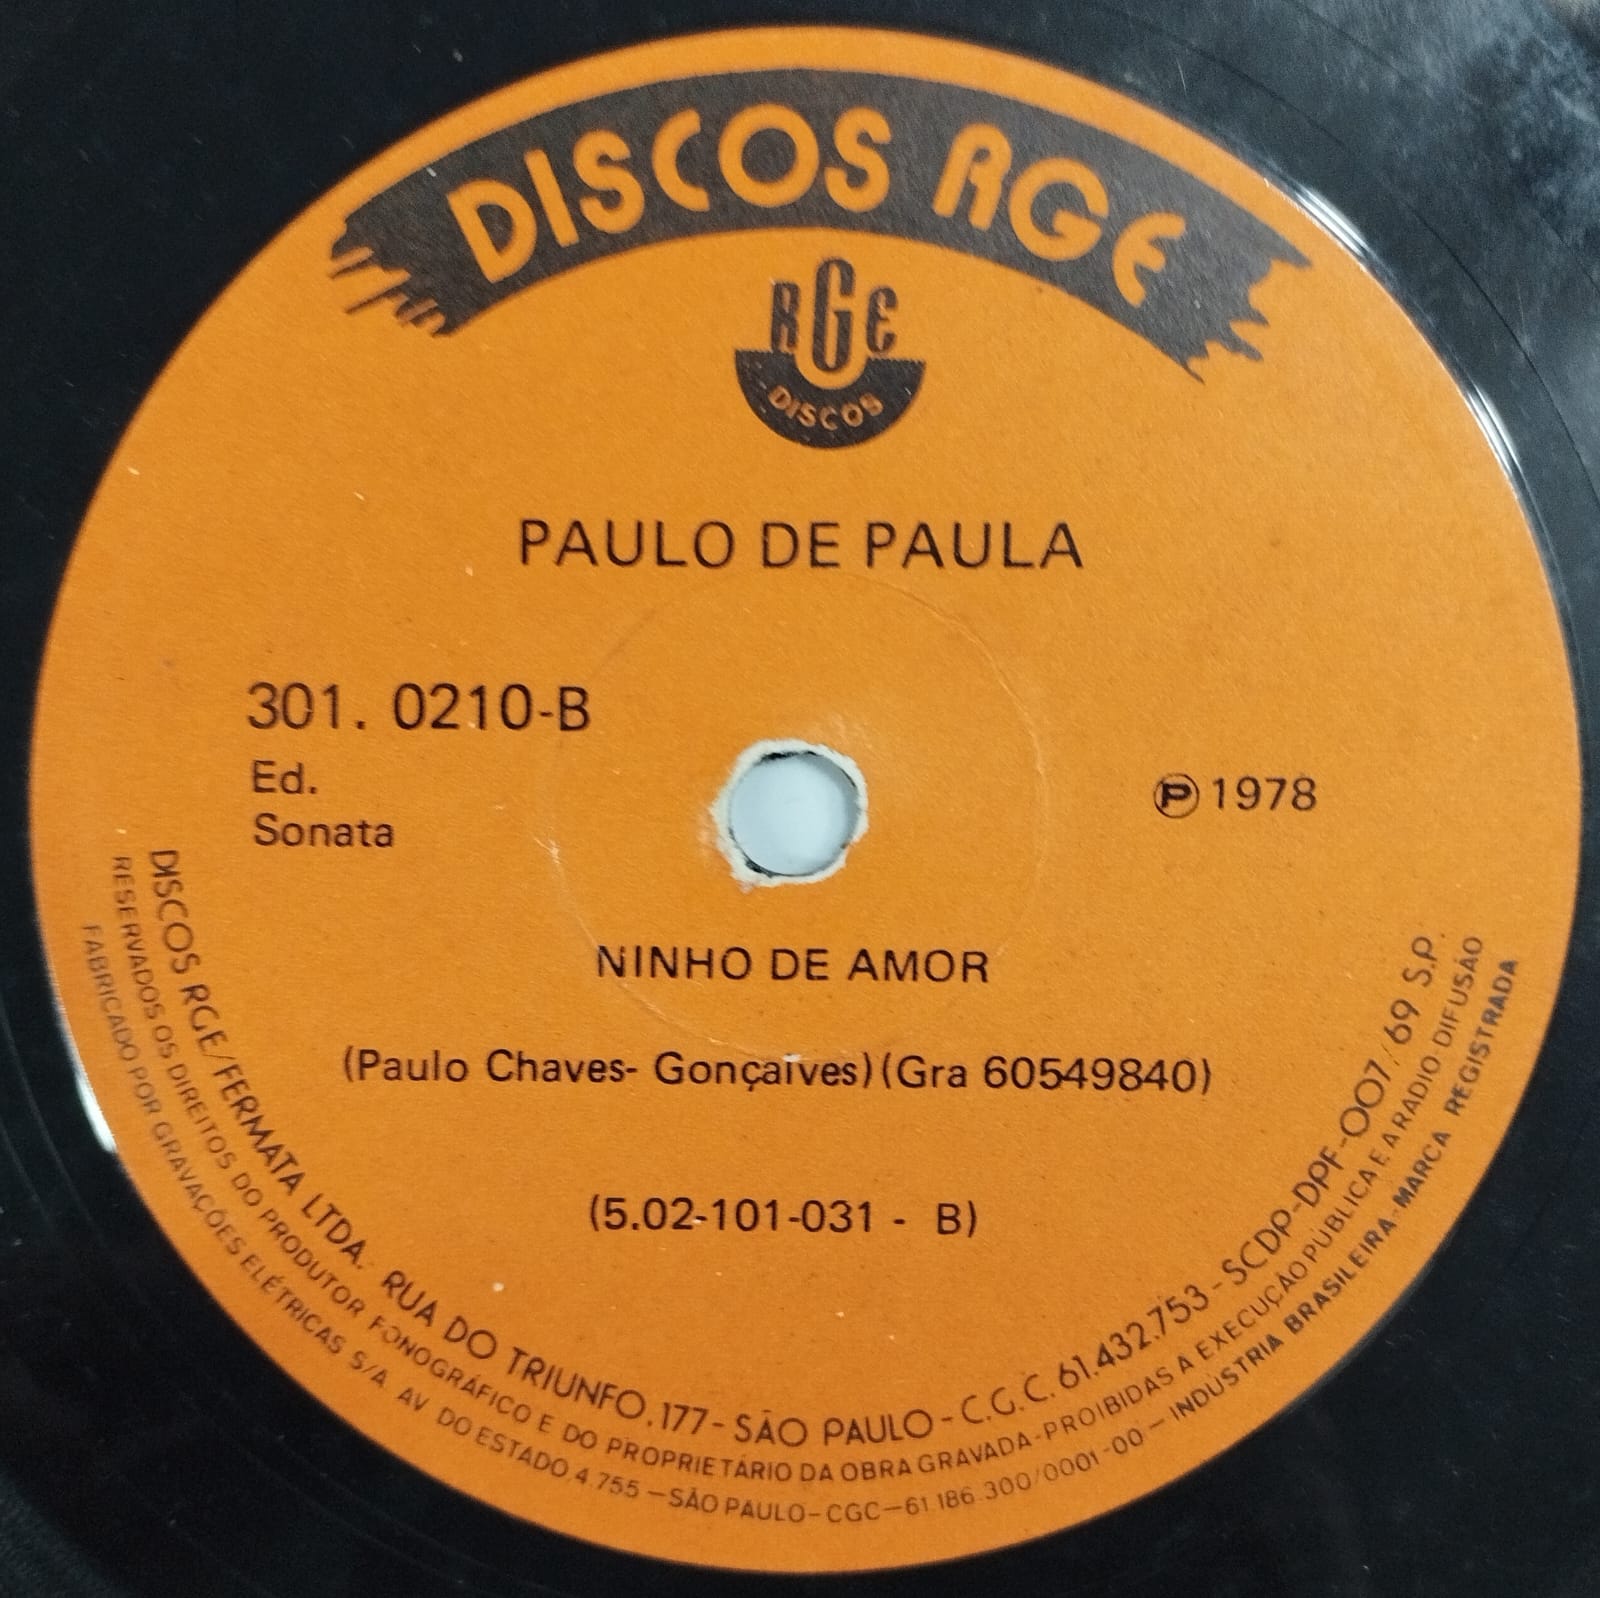 Paulo de Paula ‎– Realidade / Ninho de Amor (Compacto)